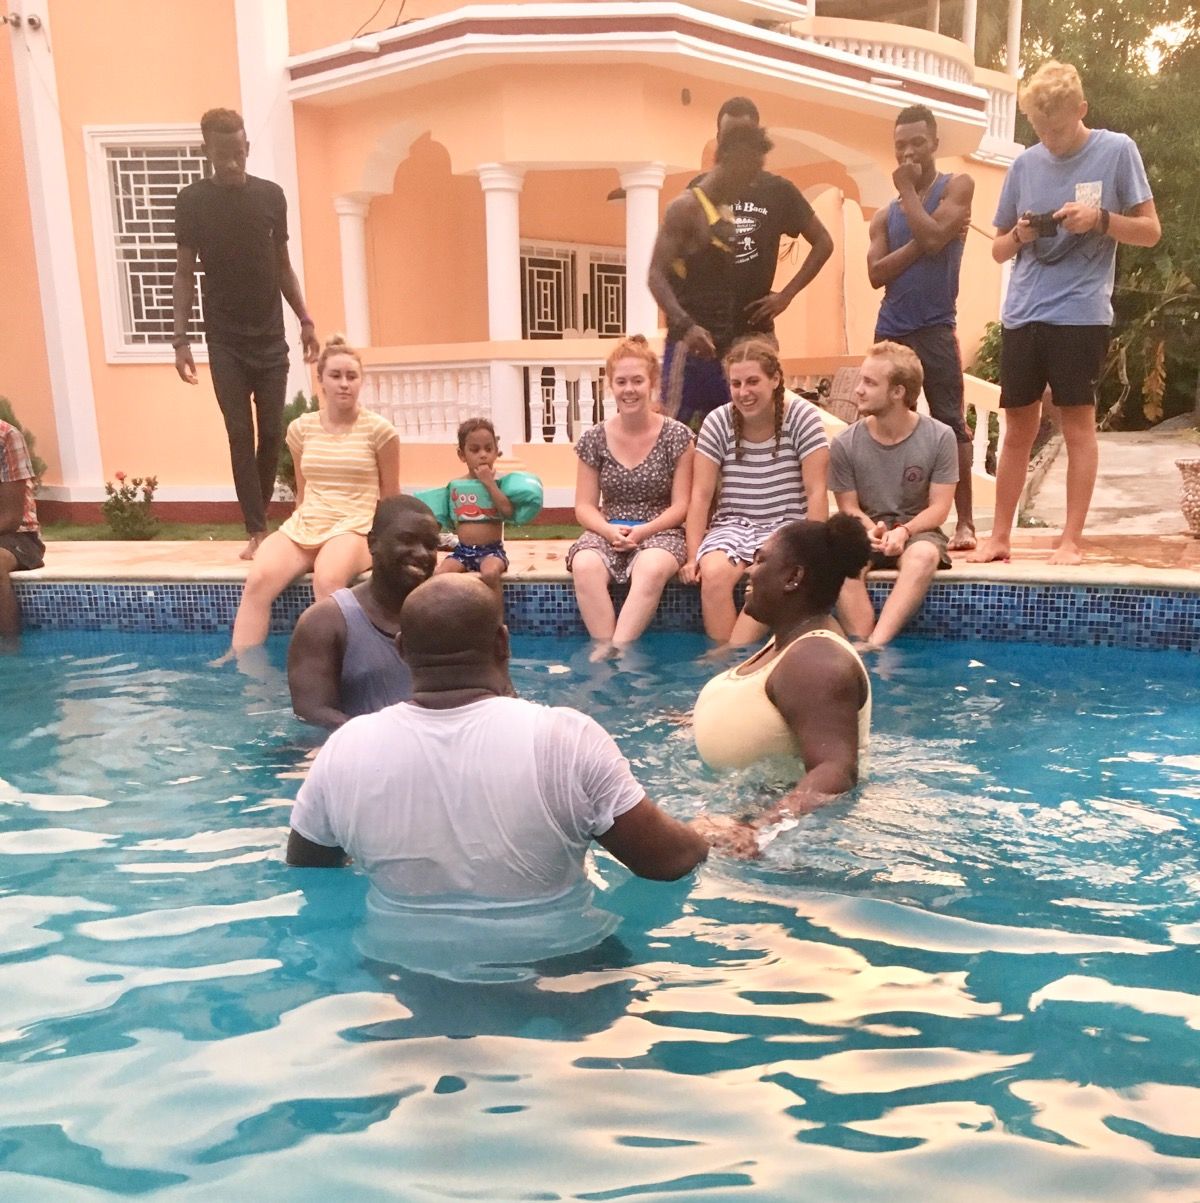 OUR BEAUTIFUL FRIEND GRACE GETTING BAPTIZED